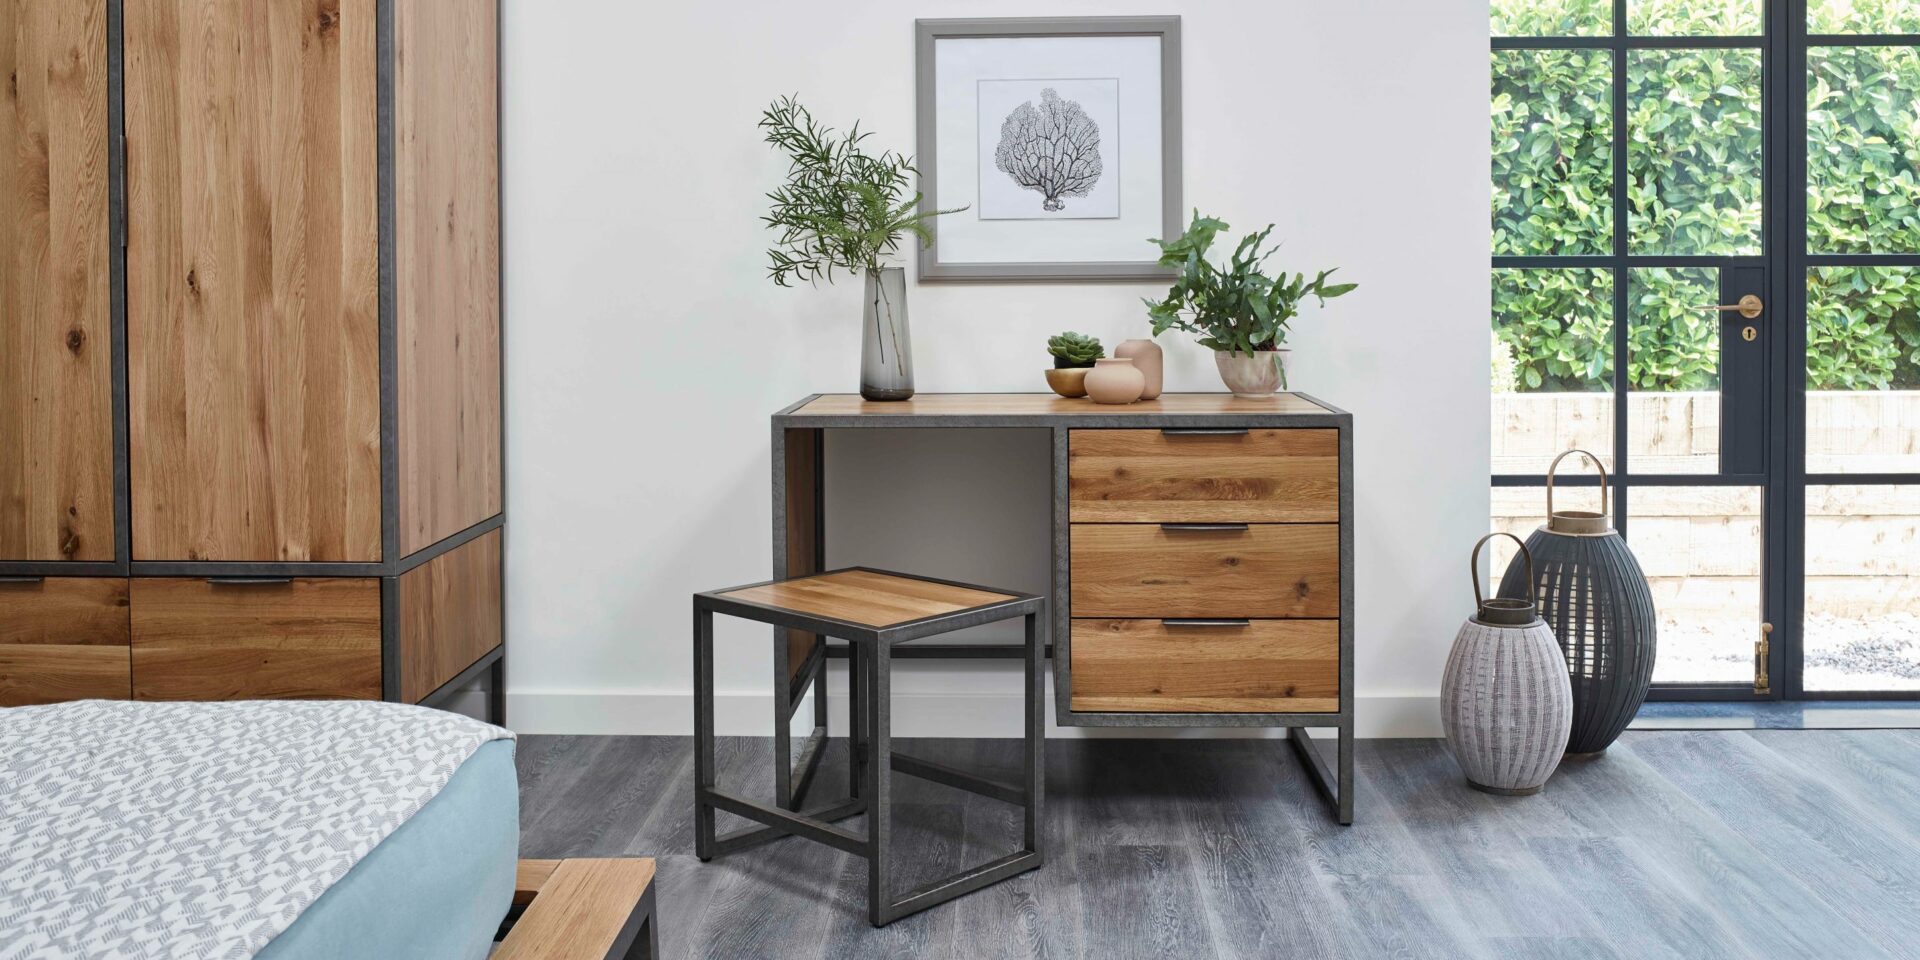 Oak Furnitureland Brooklyn dressing table and stool